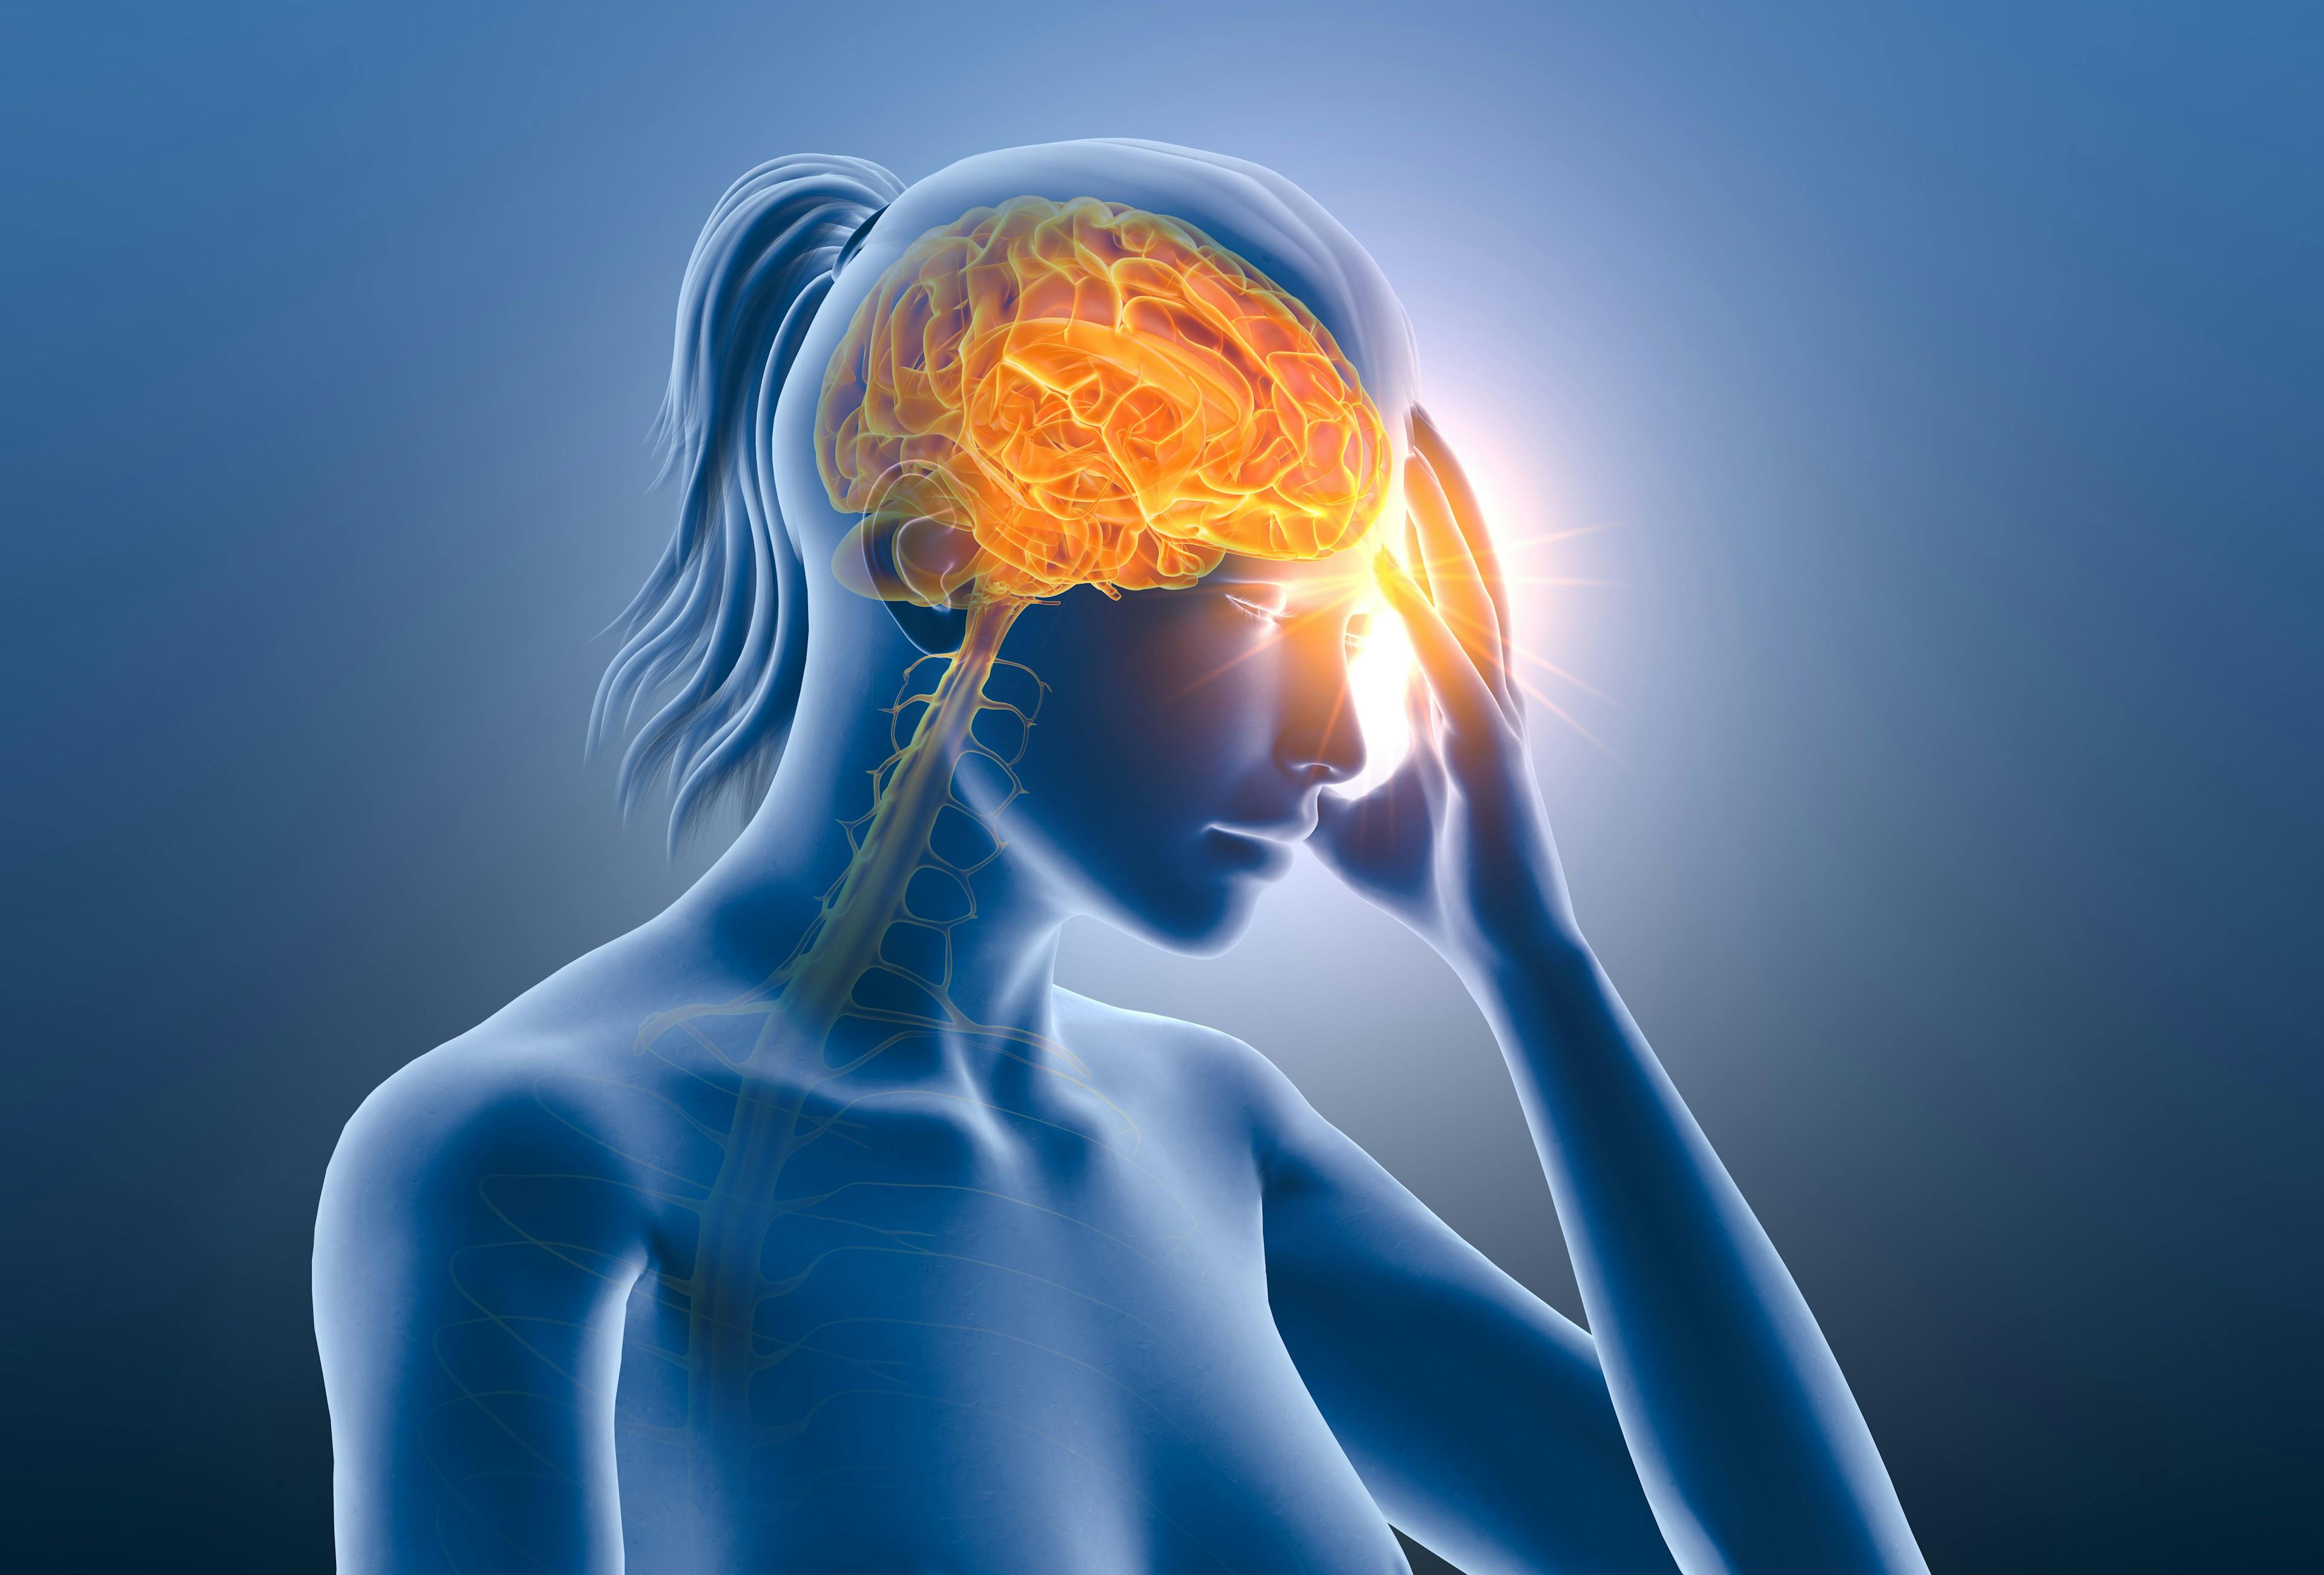 Migraine history associated with poor sleep 